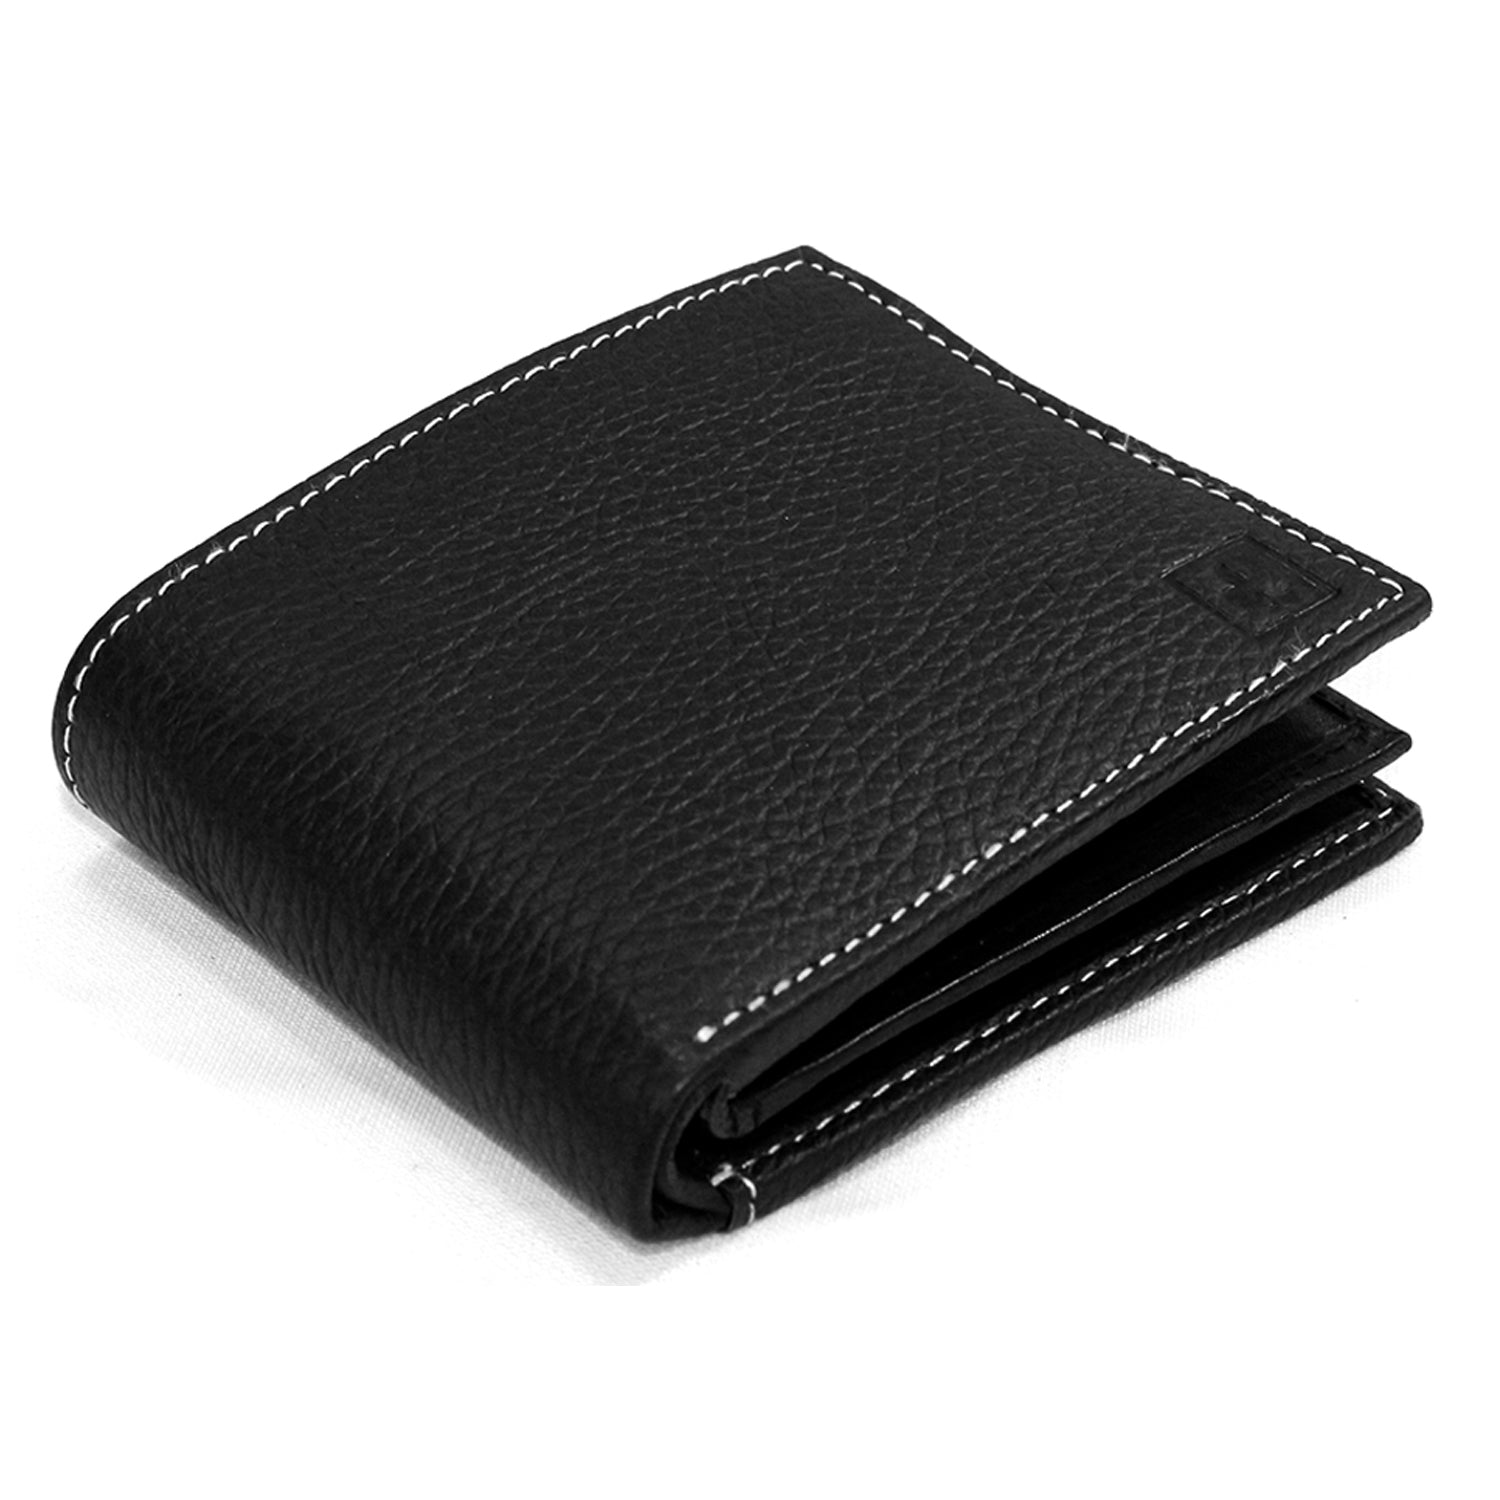 CIMONI® Premium Genuine Leather Wallet for Men Casual Wallet with RFID Protection 6 Card 1 Id Slots Slim Elegant Design Wallet (Color - Black)